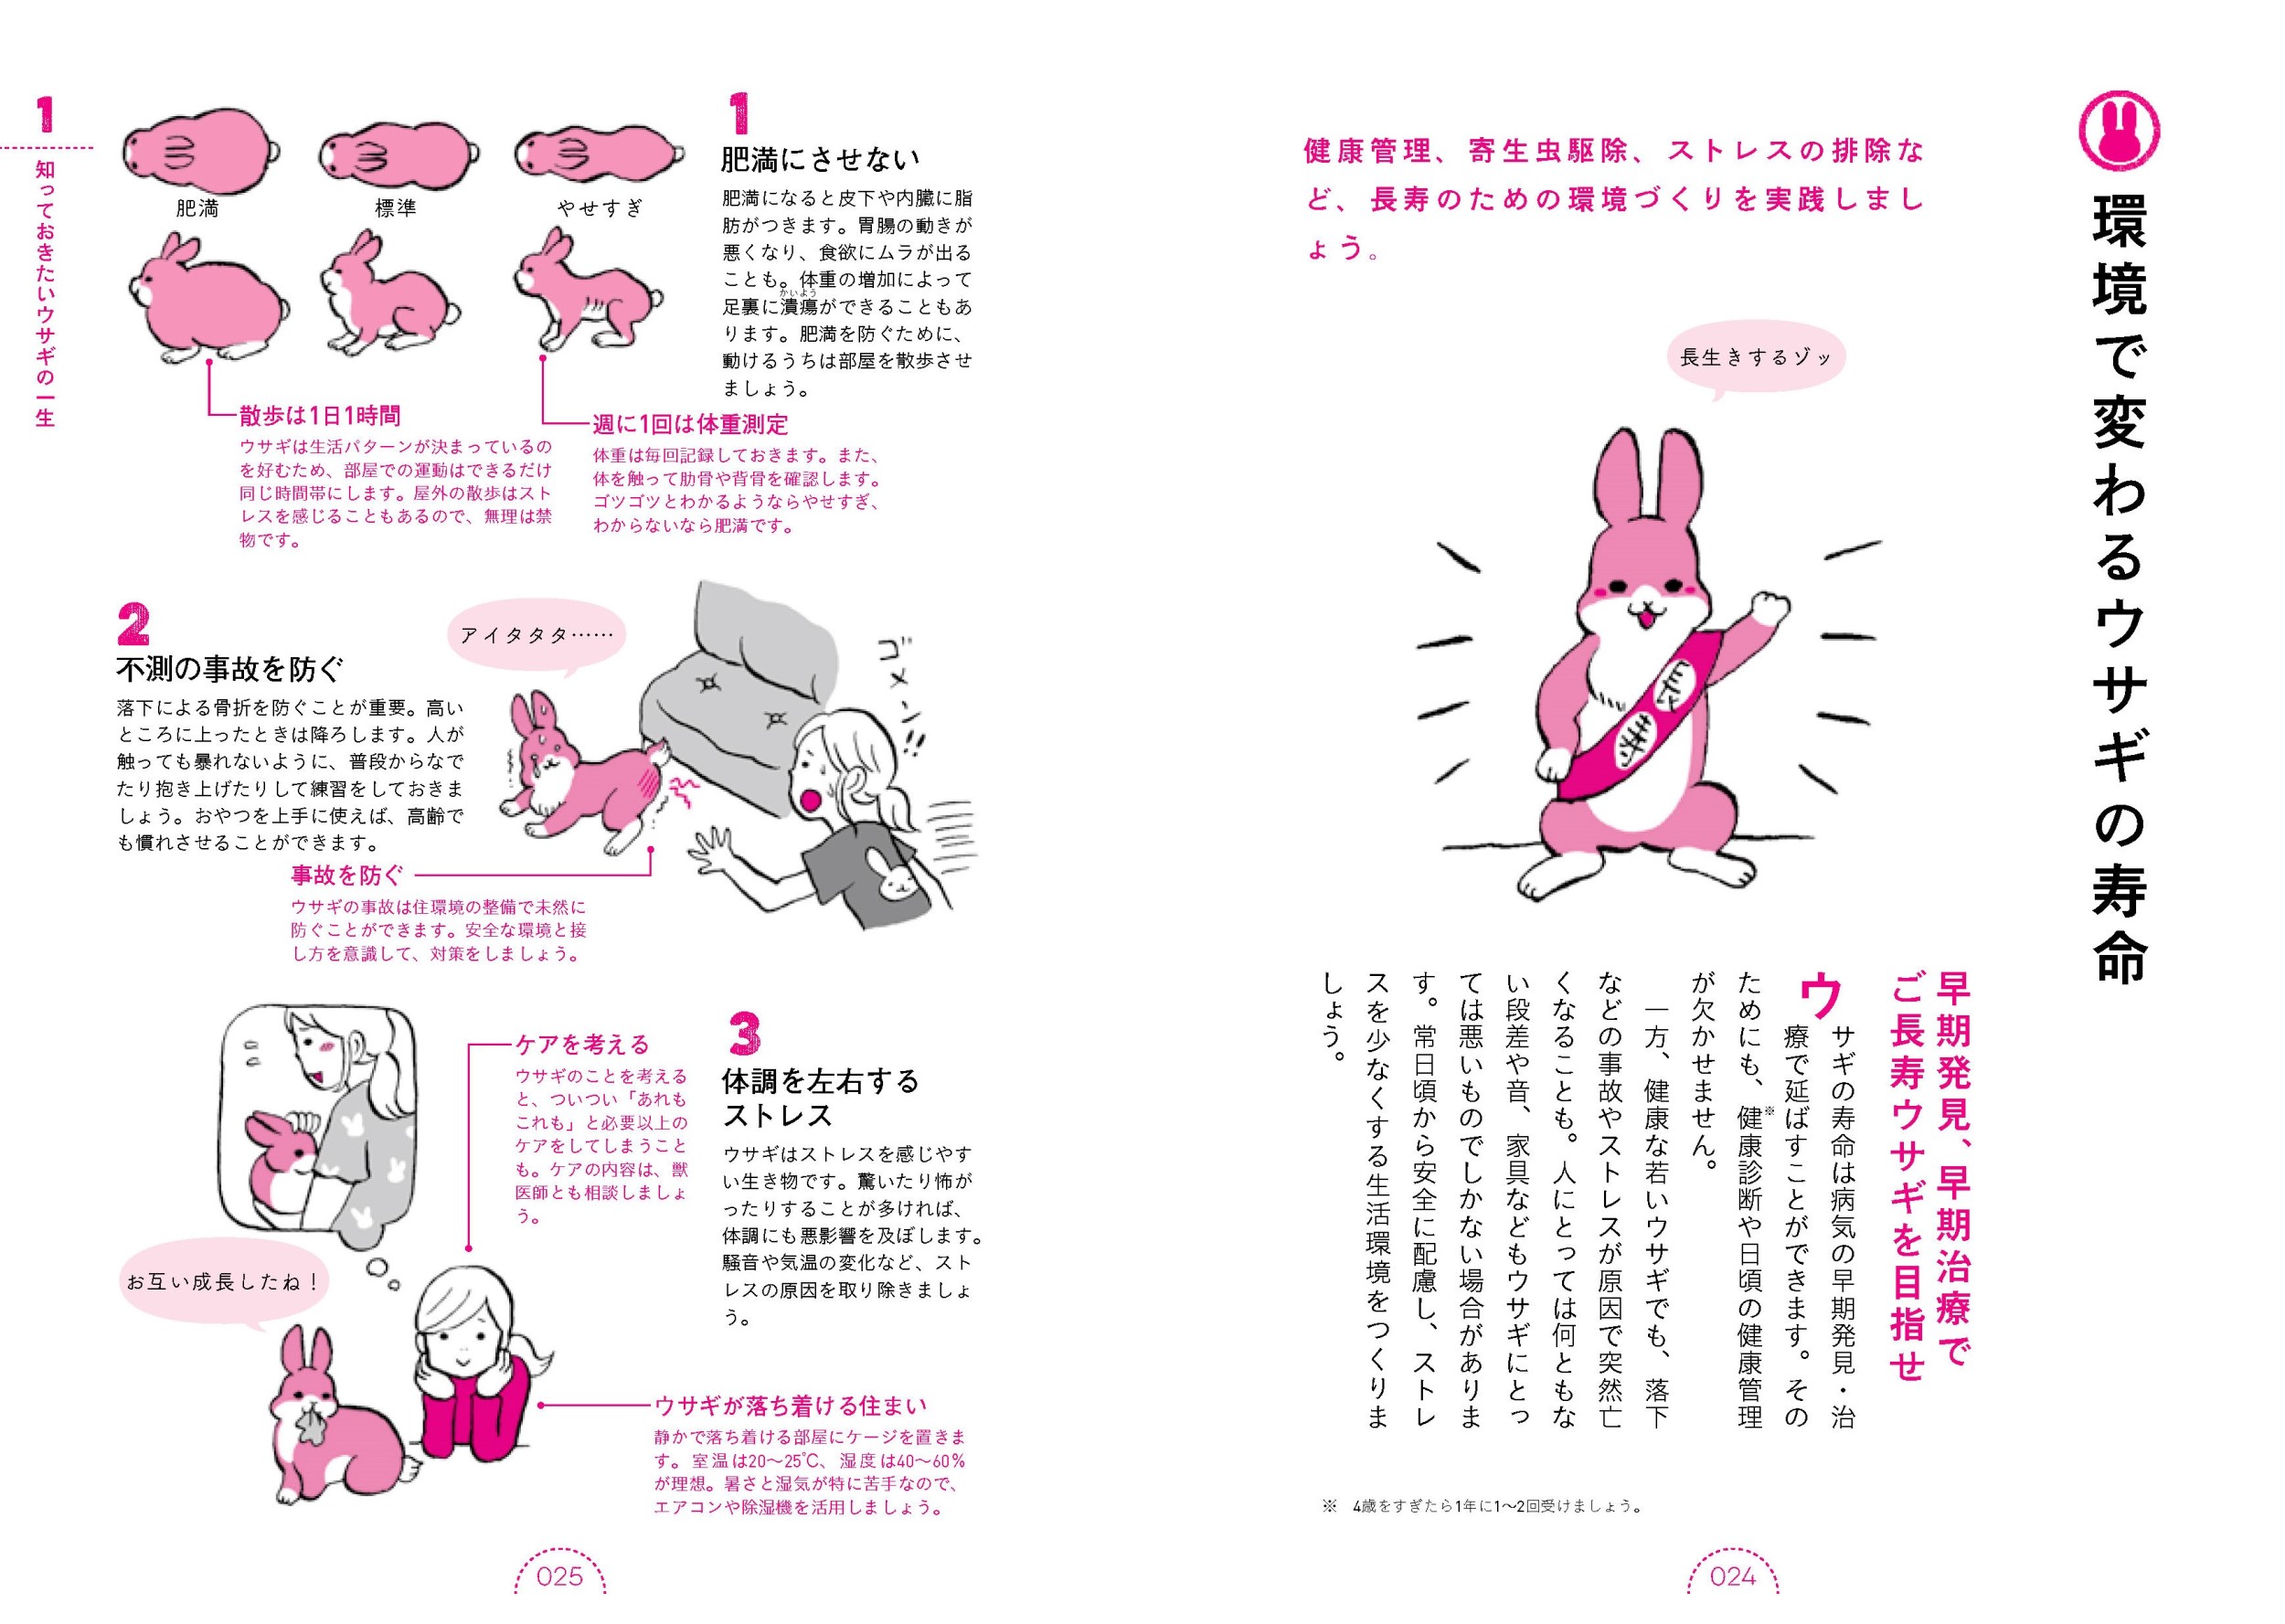 X-Knowledge | ウサギの看取りガイド 増補改訂版